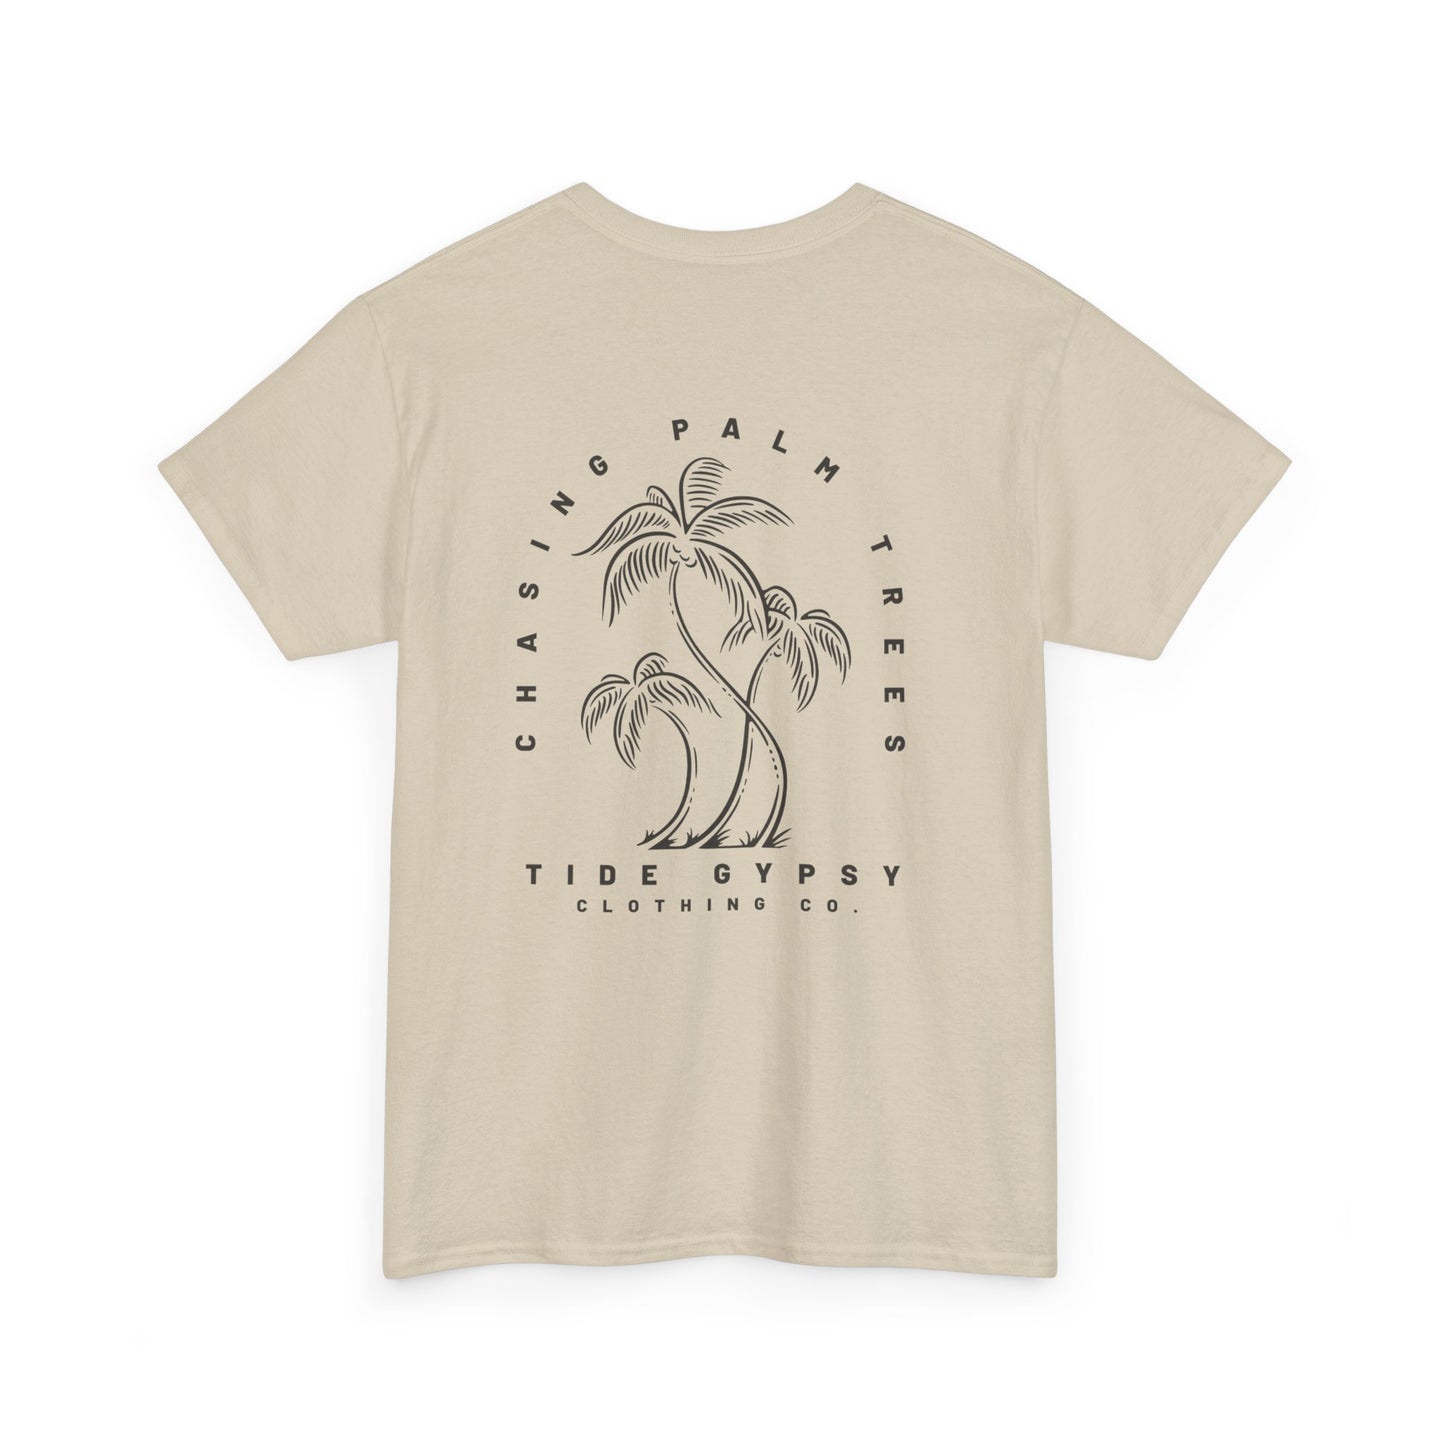 Chasing Palm Trees T-shirt